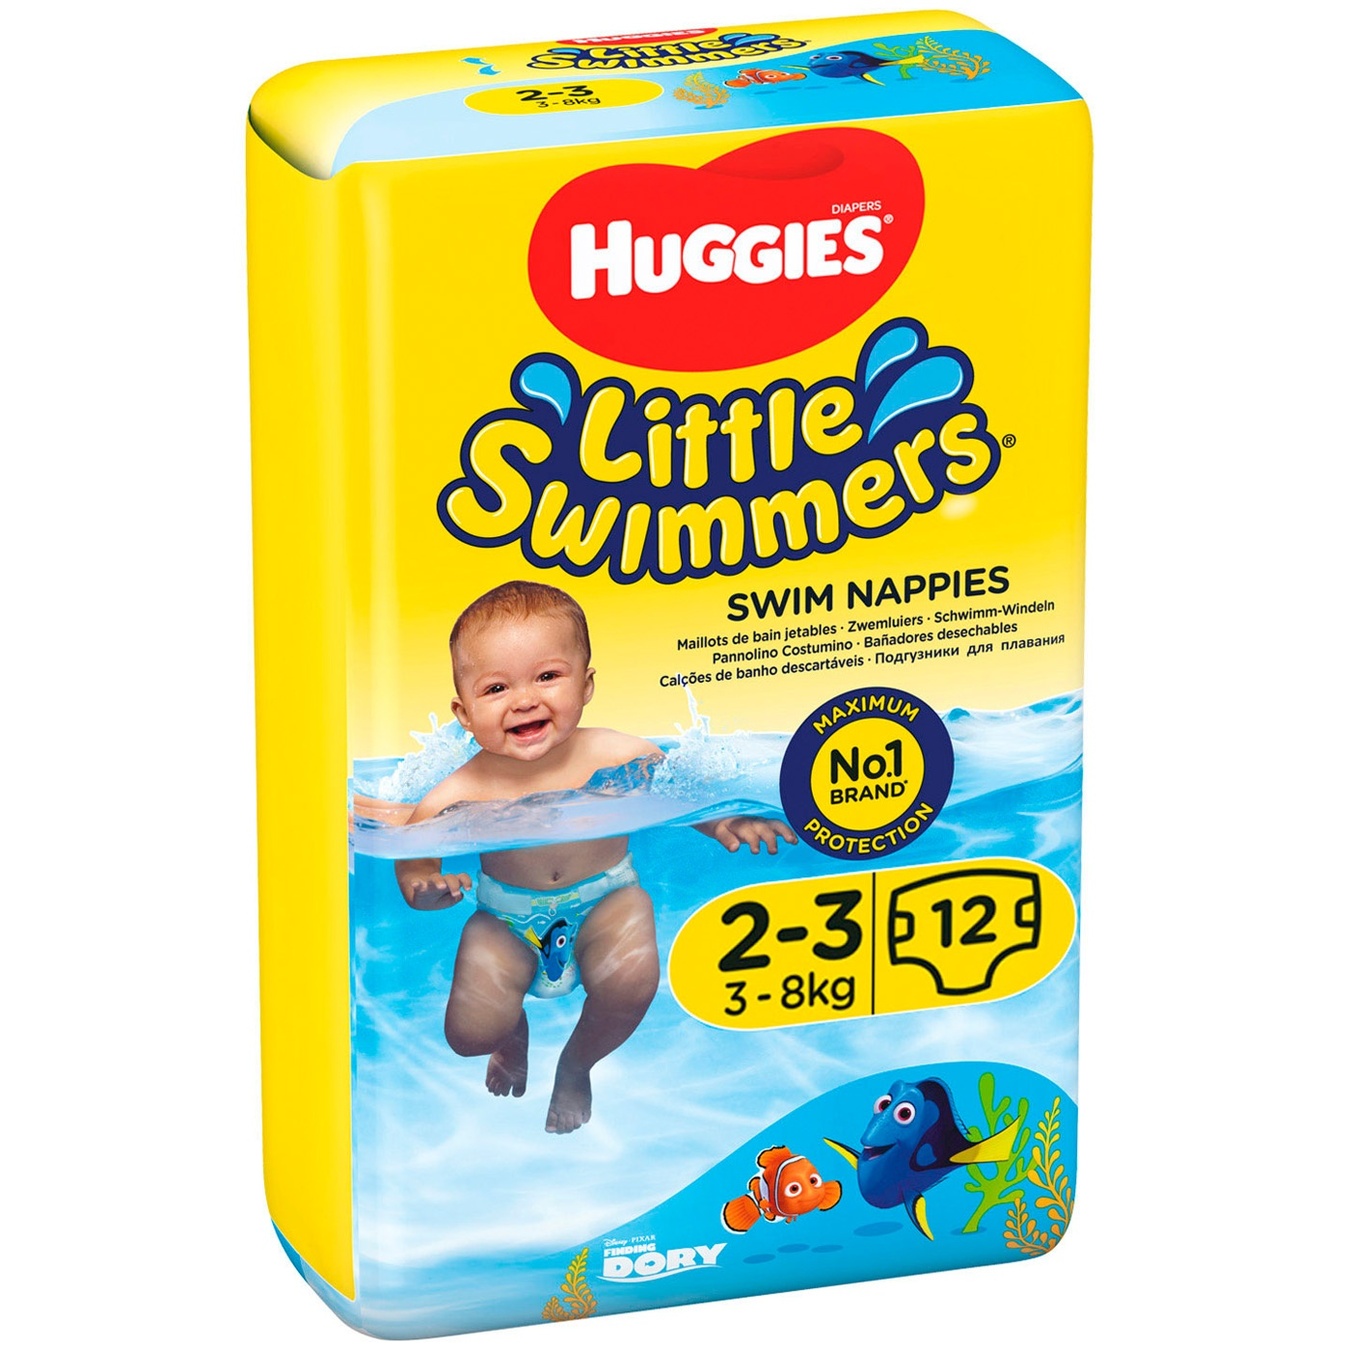 huggies little swimmers auchan